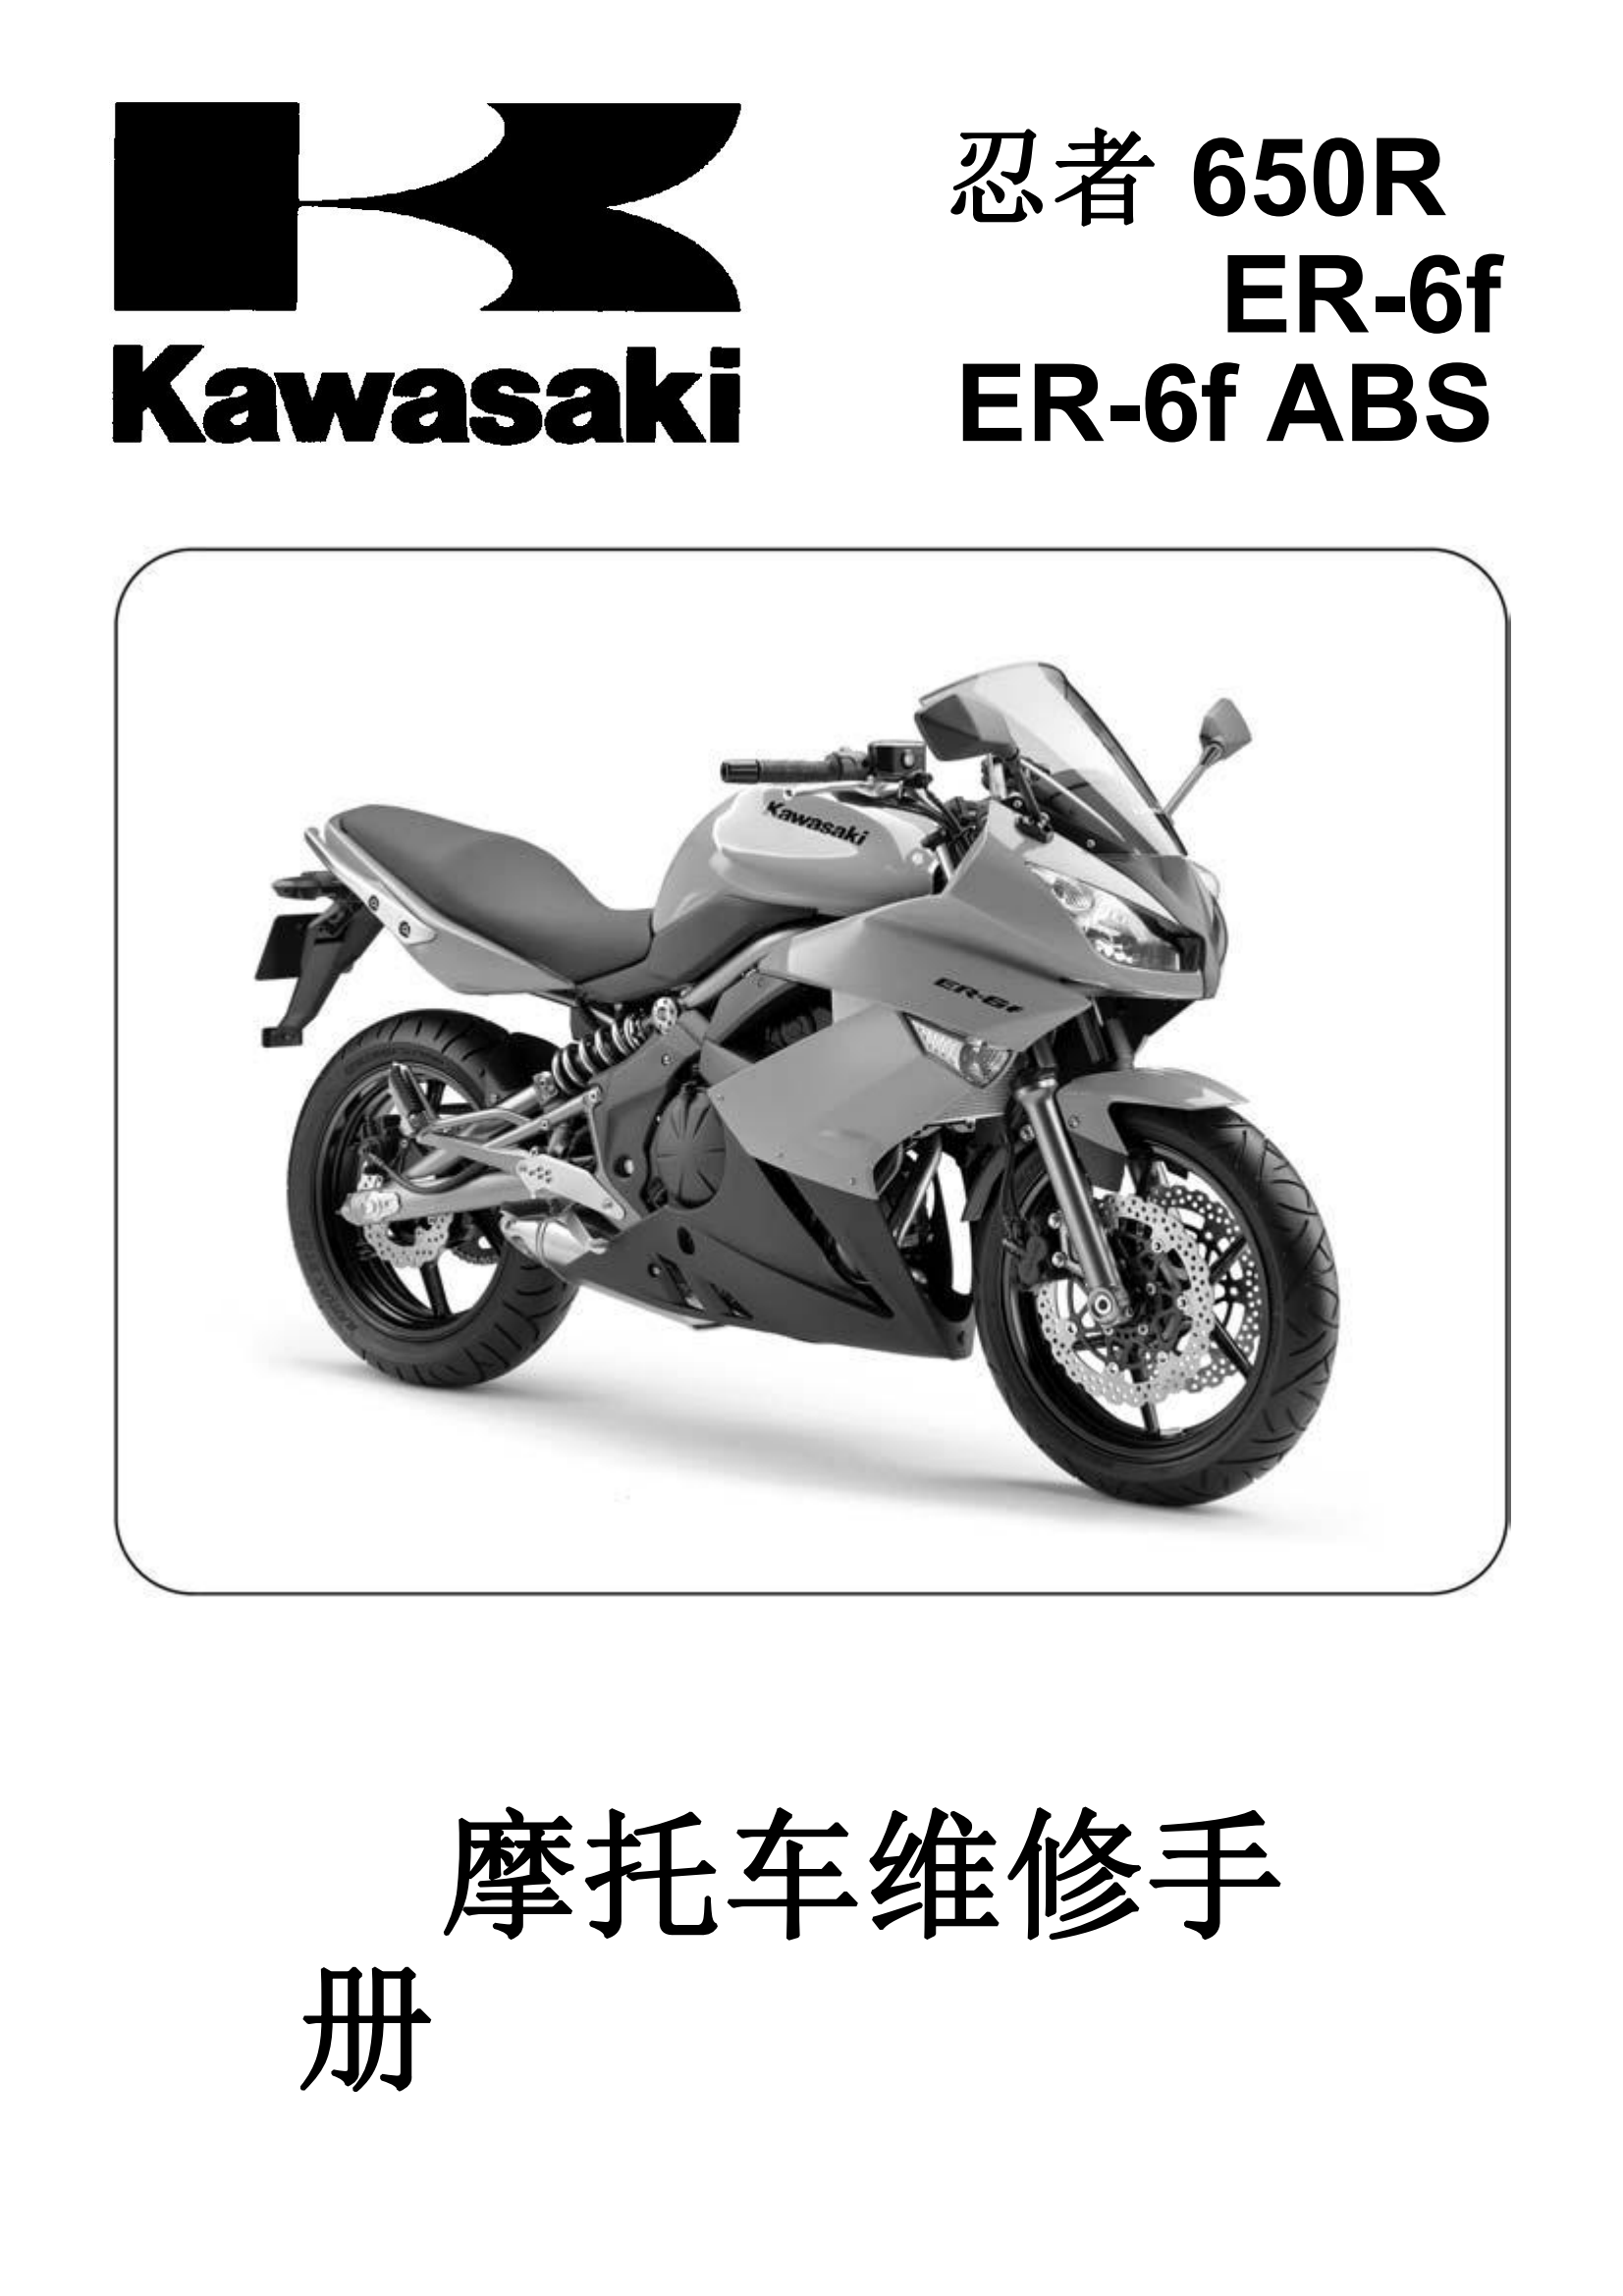 简体中文2009-2011年川崎er6f abs ninja 650r abs er-6f 维修手册插图